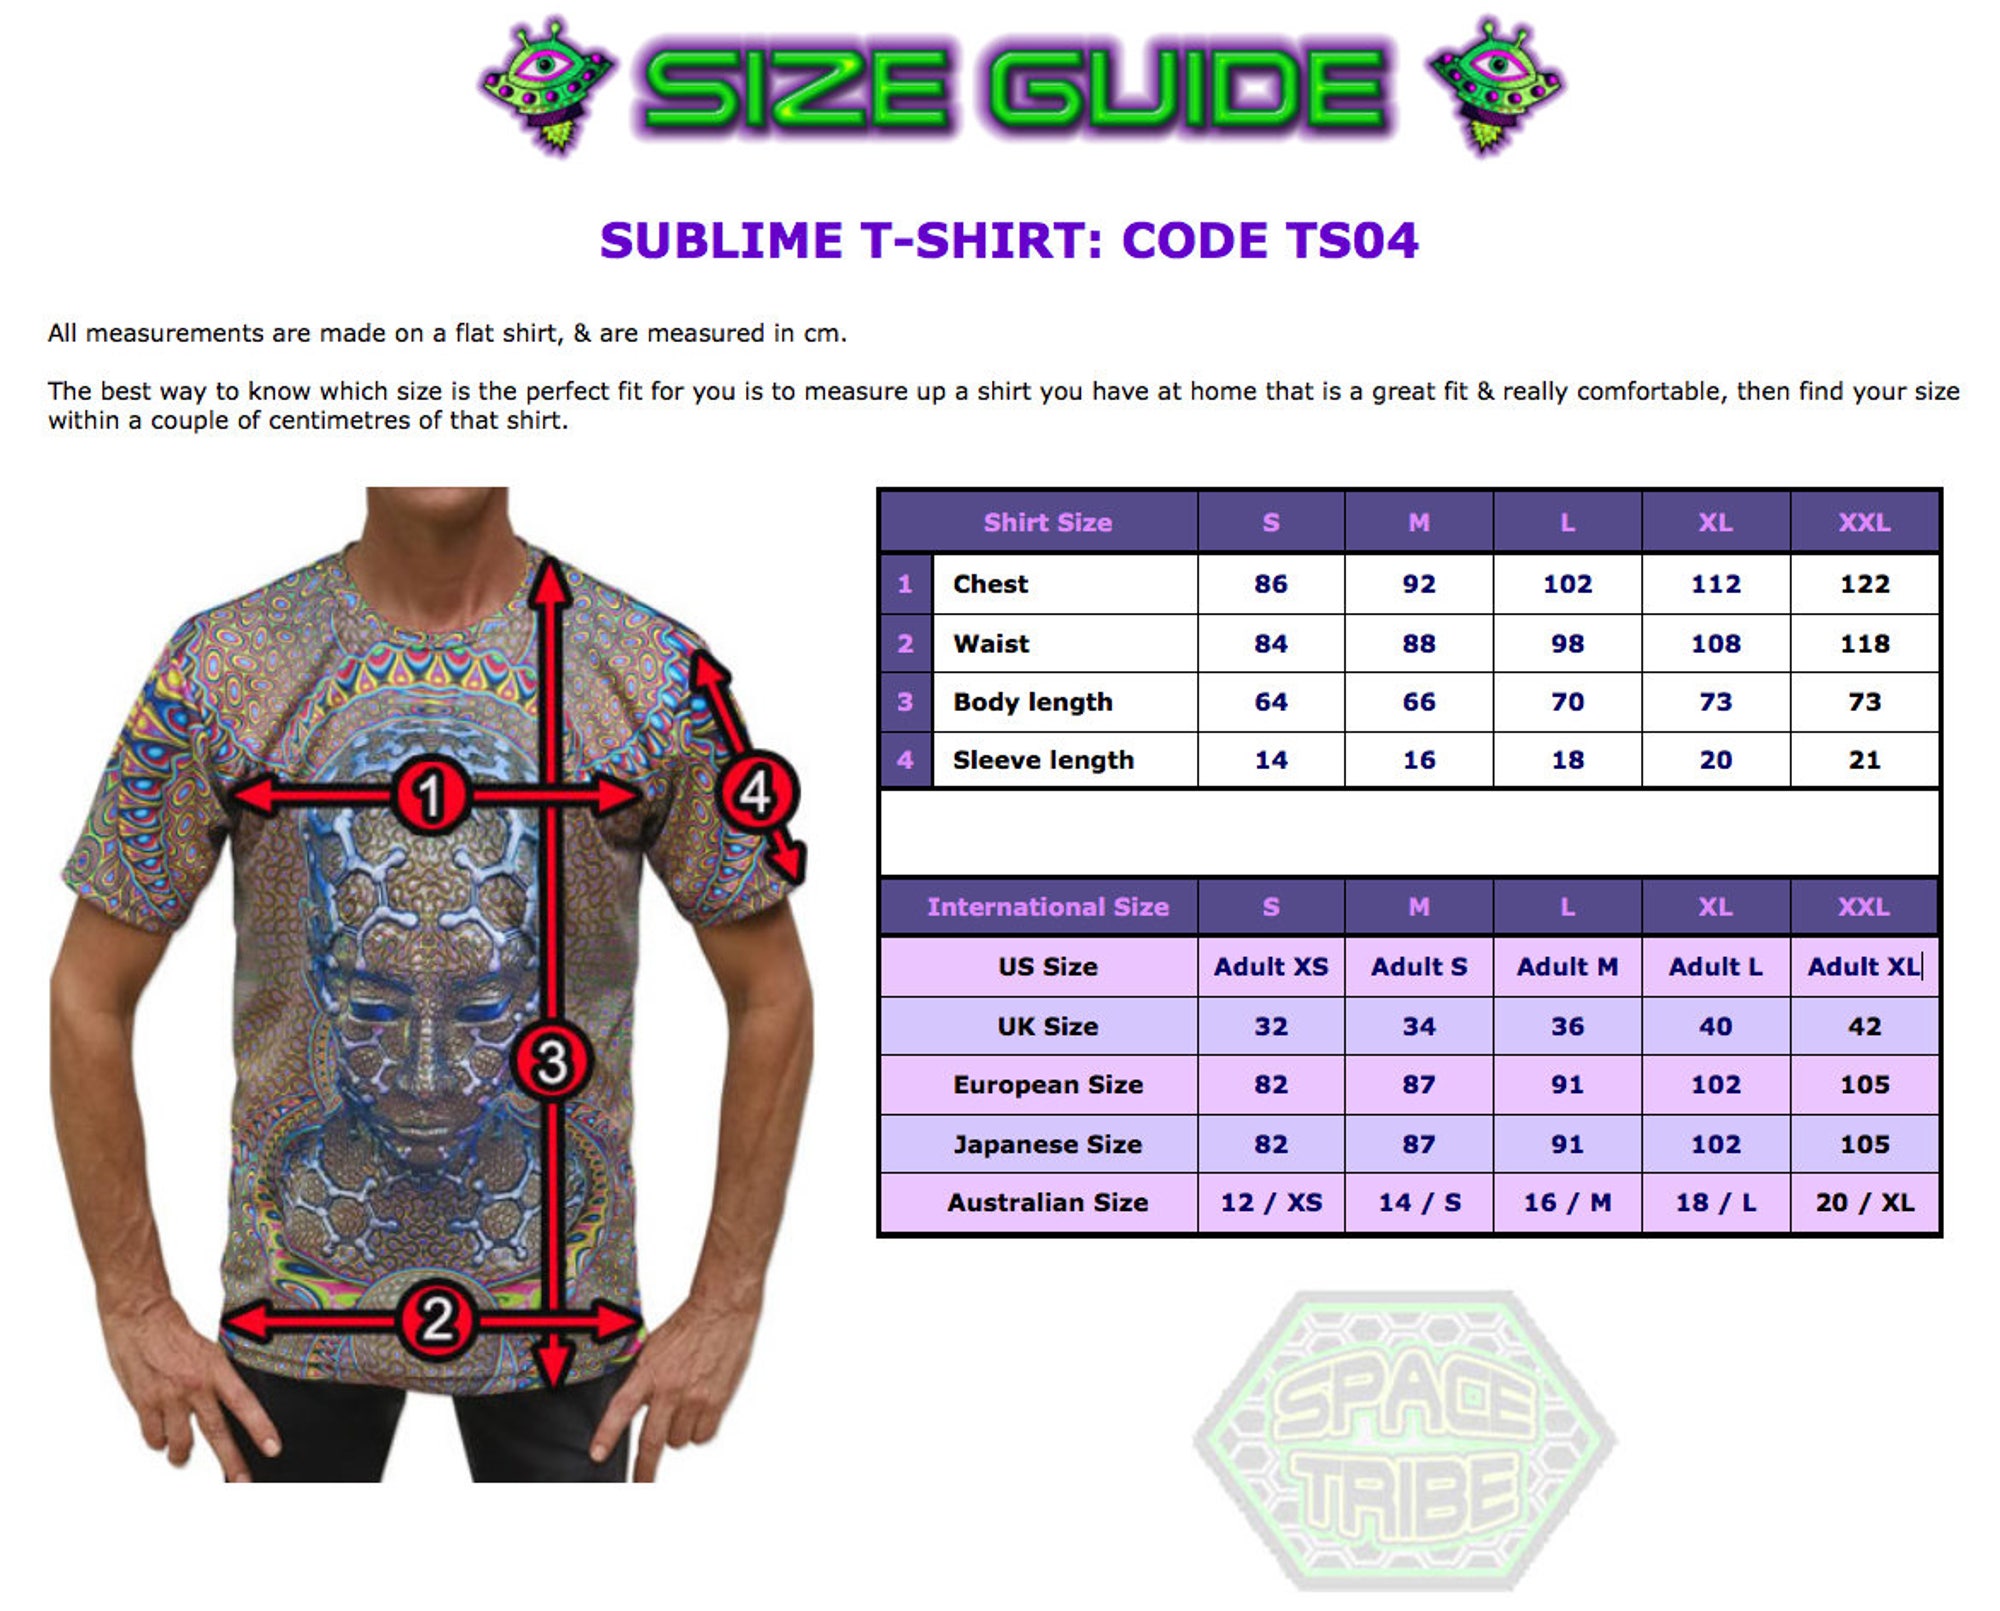 Psychedelic Fake Guru UV Trippy T shirt 3D